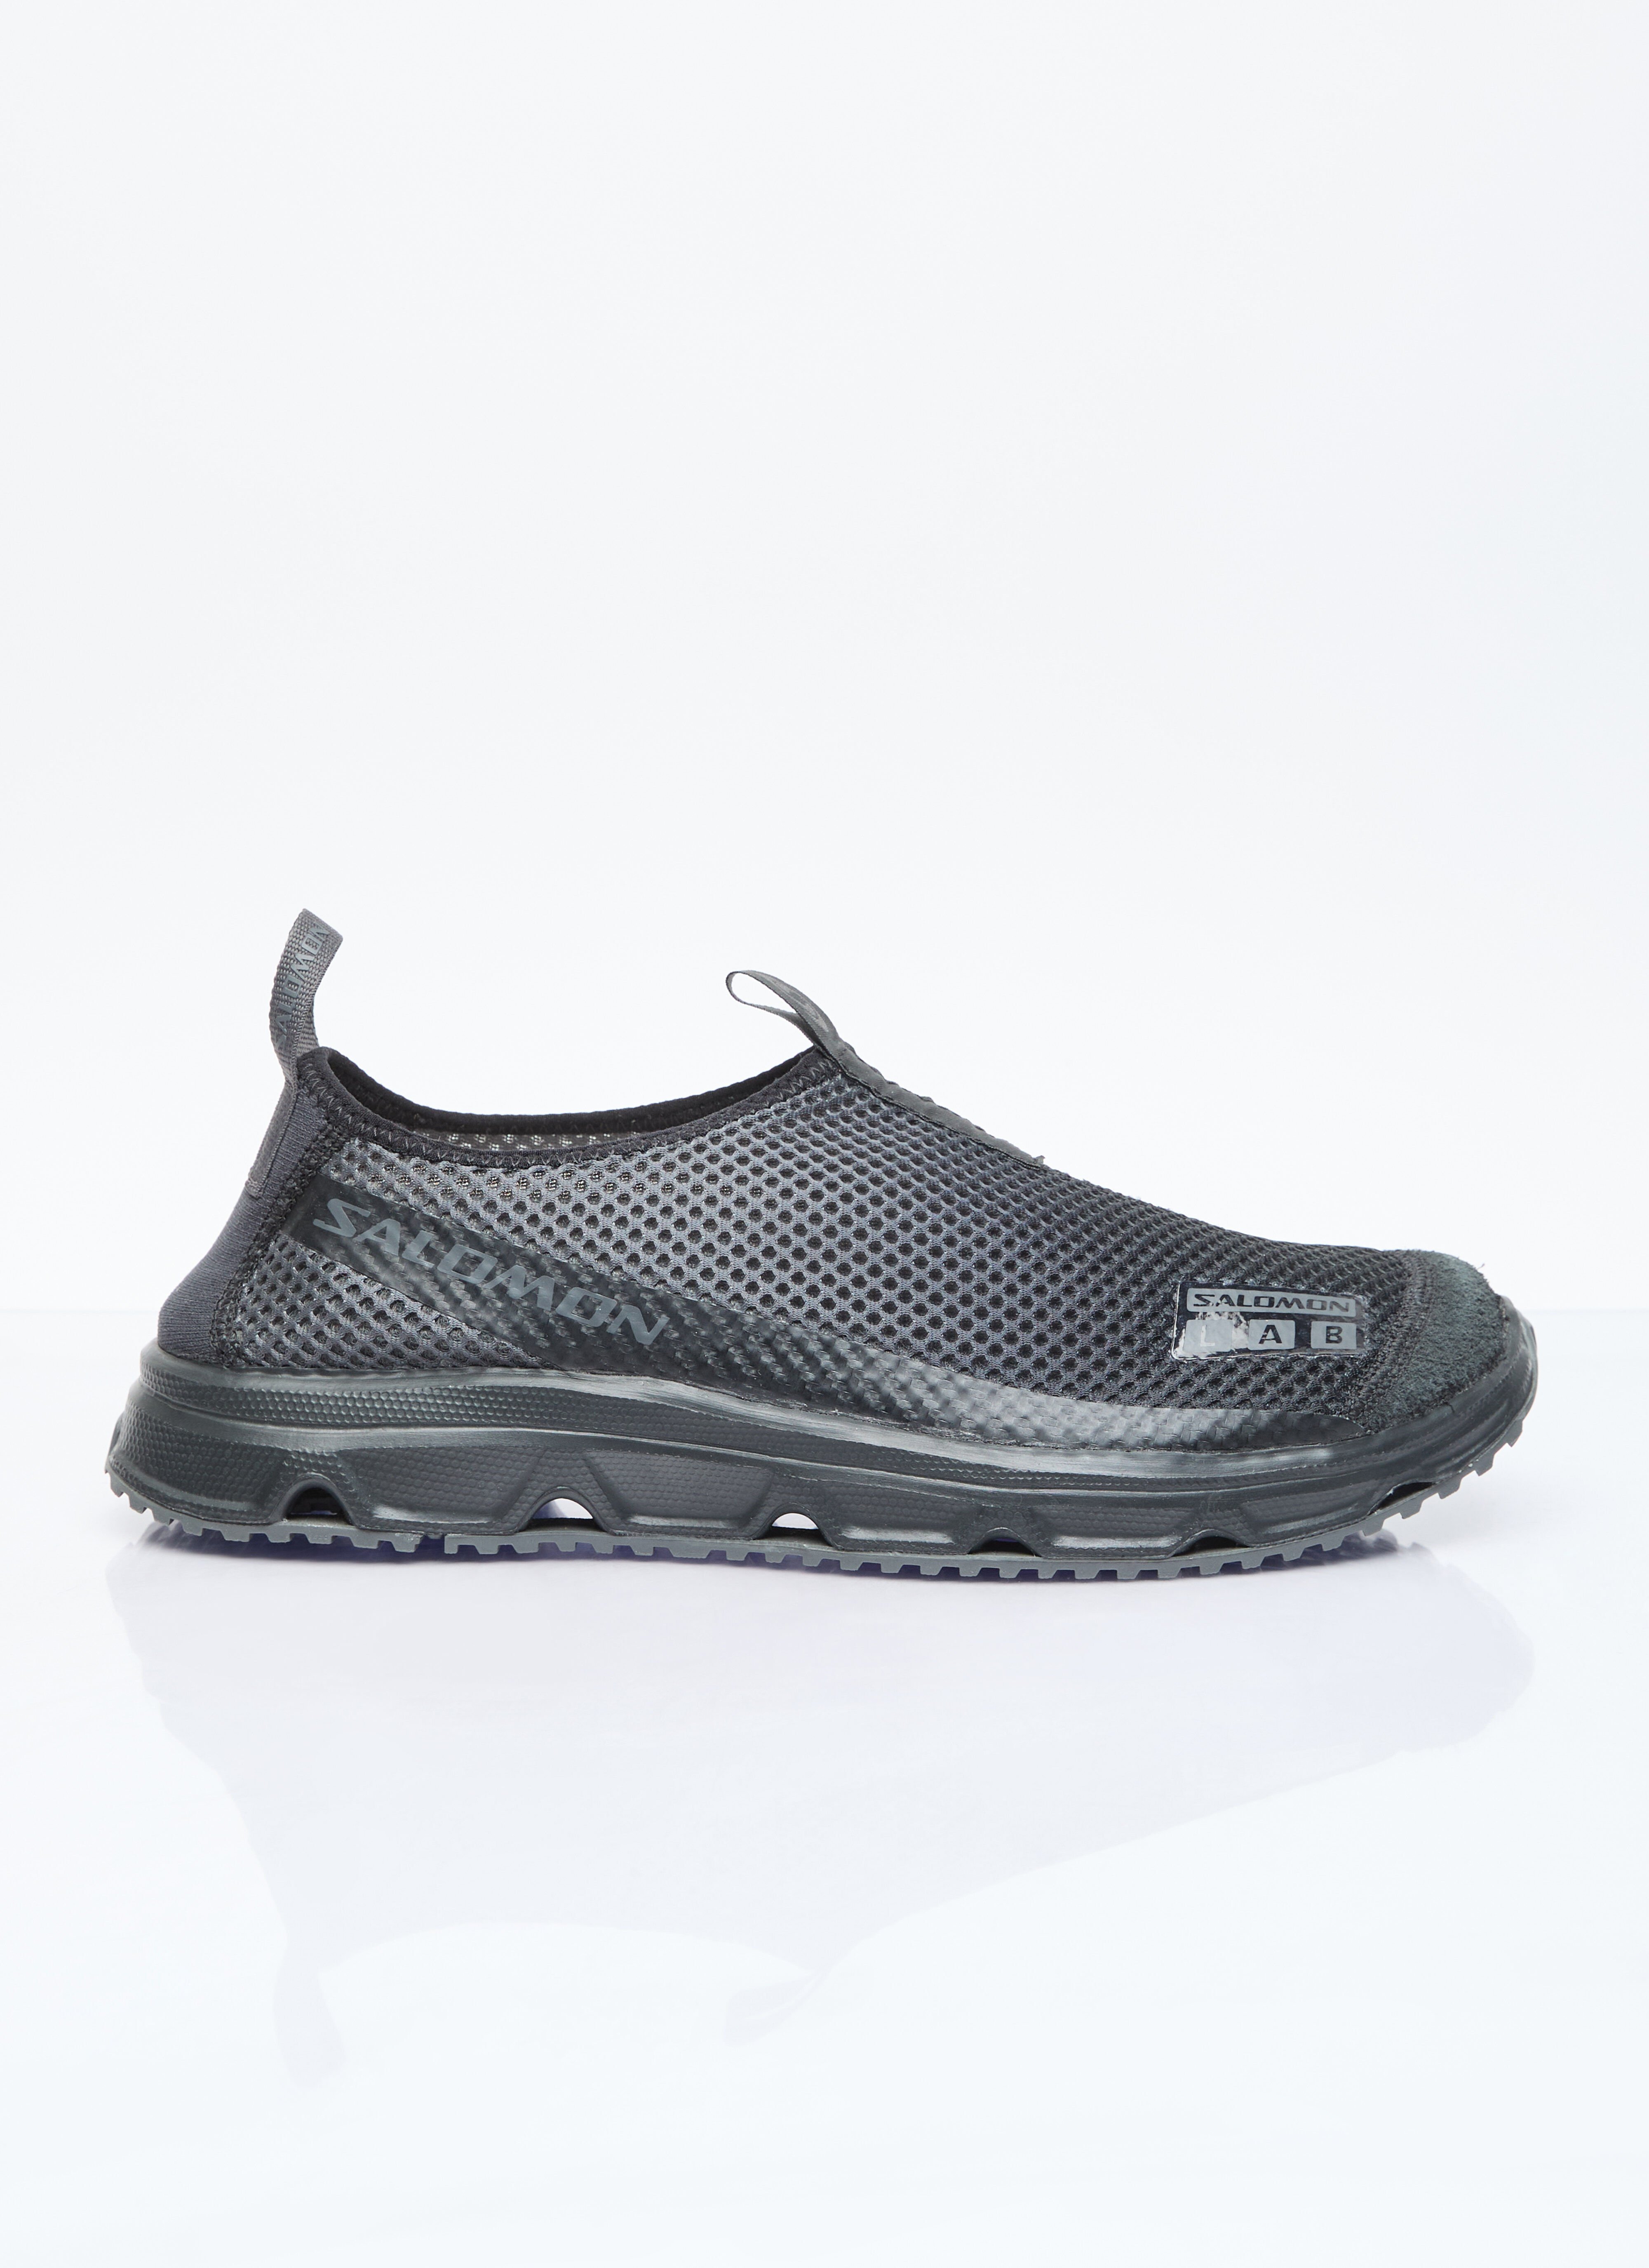 Salomon RX Moc 3.0 麂皮运动鞋 棕色 sal0356009